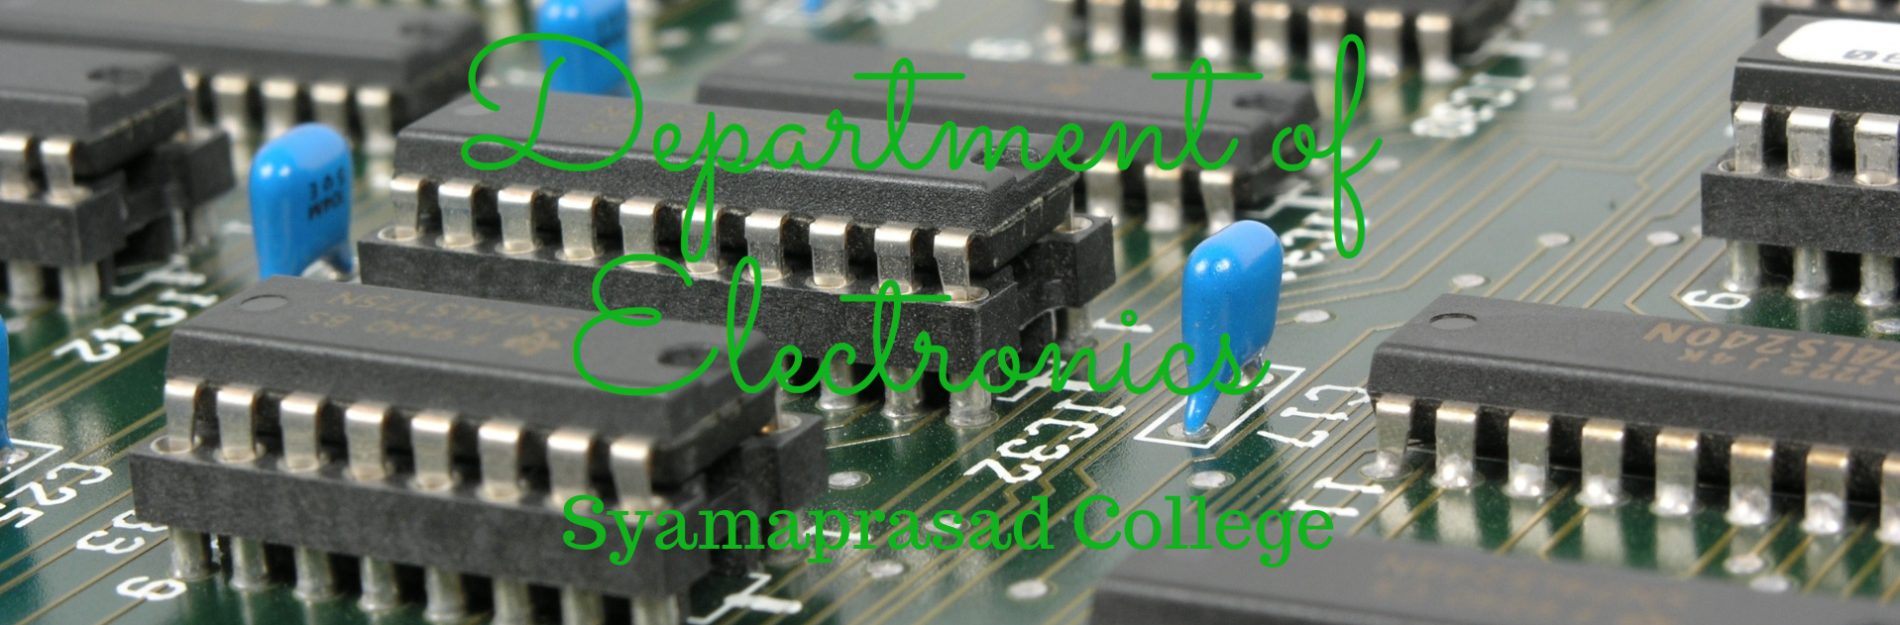 electronics-banner